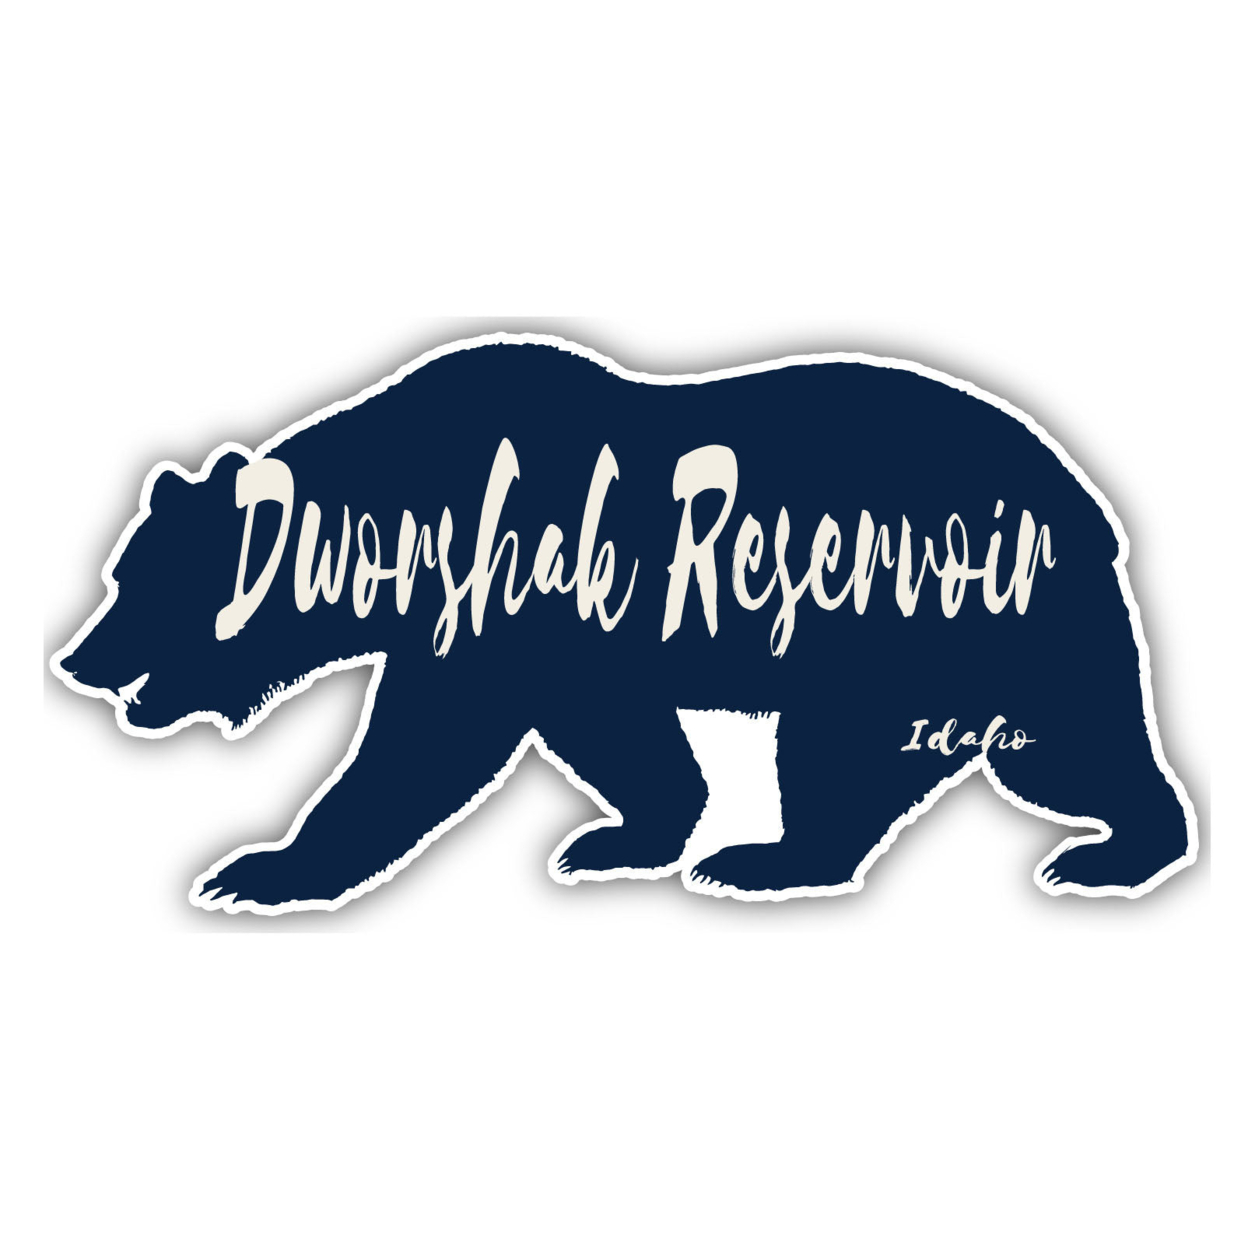 Dworshak Reservoir Idaho Souvenir Decorative Stickers (Choose Theme And Size) - Single Unit, 12-Inch, Tent